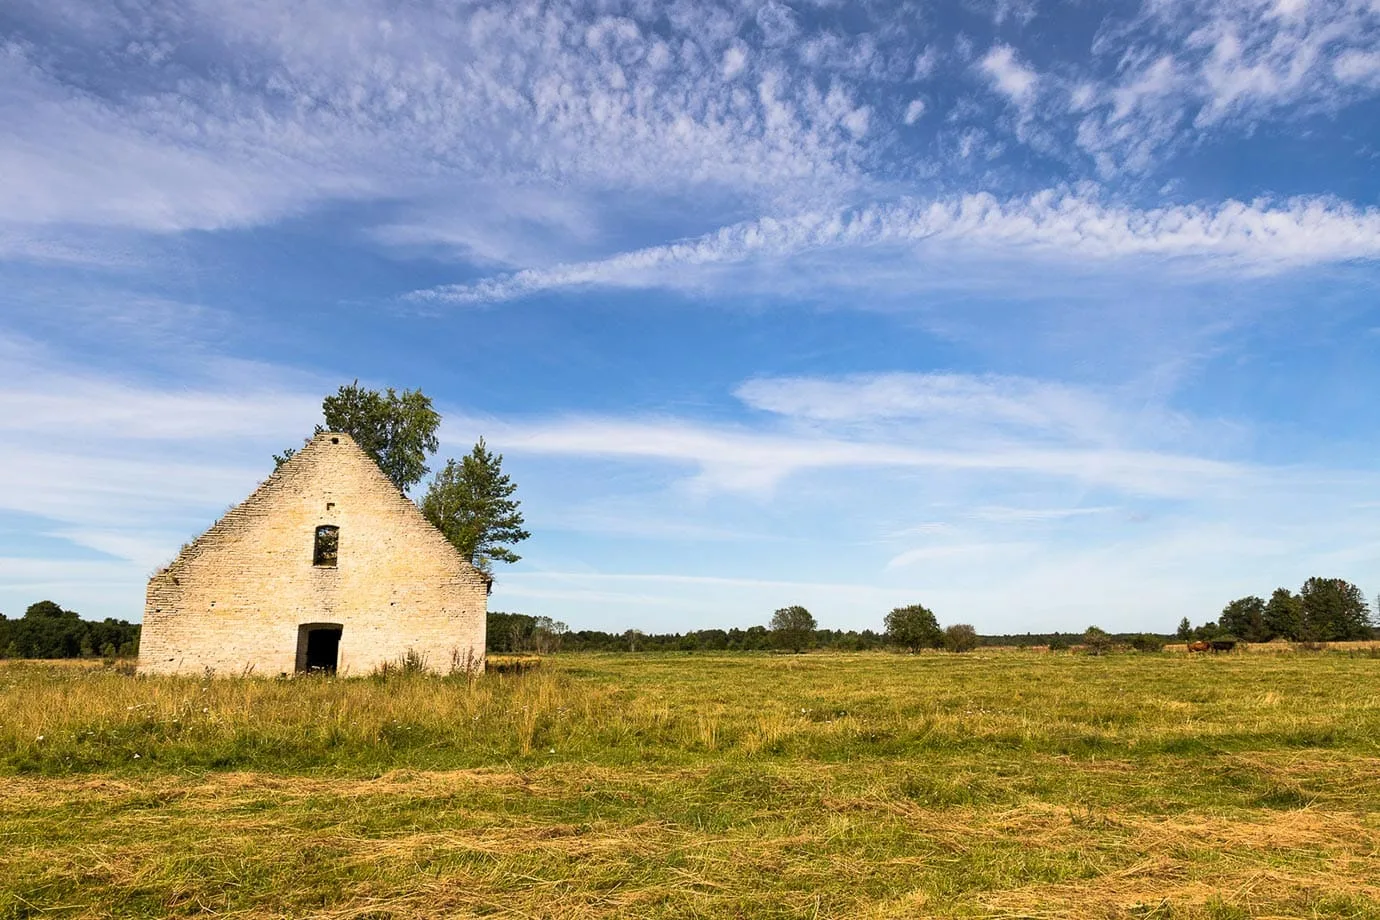 Abandoned farm house in Estonia